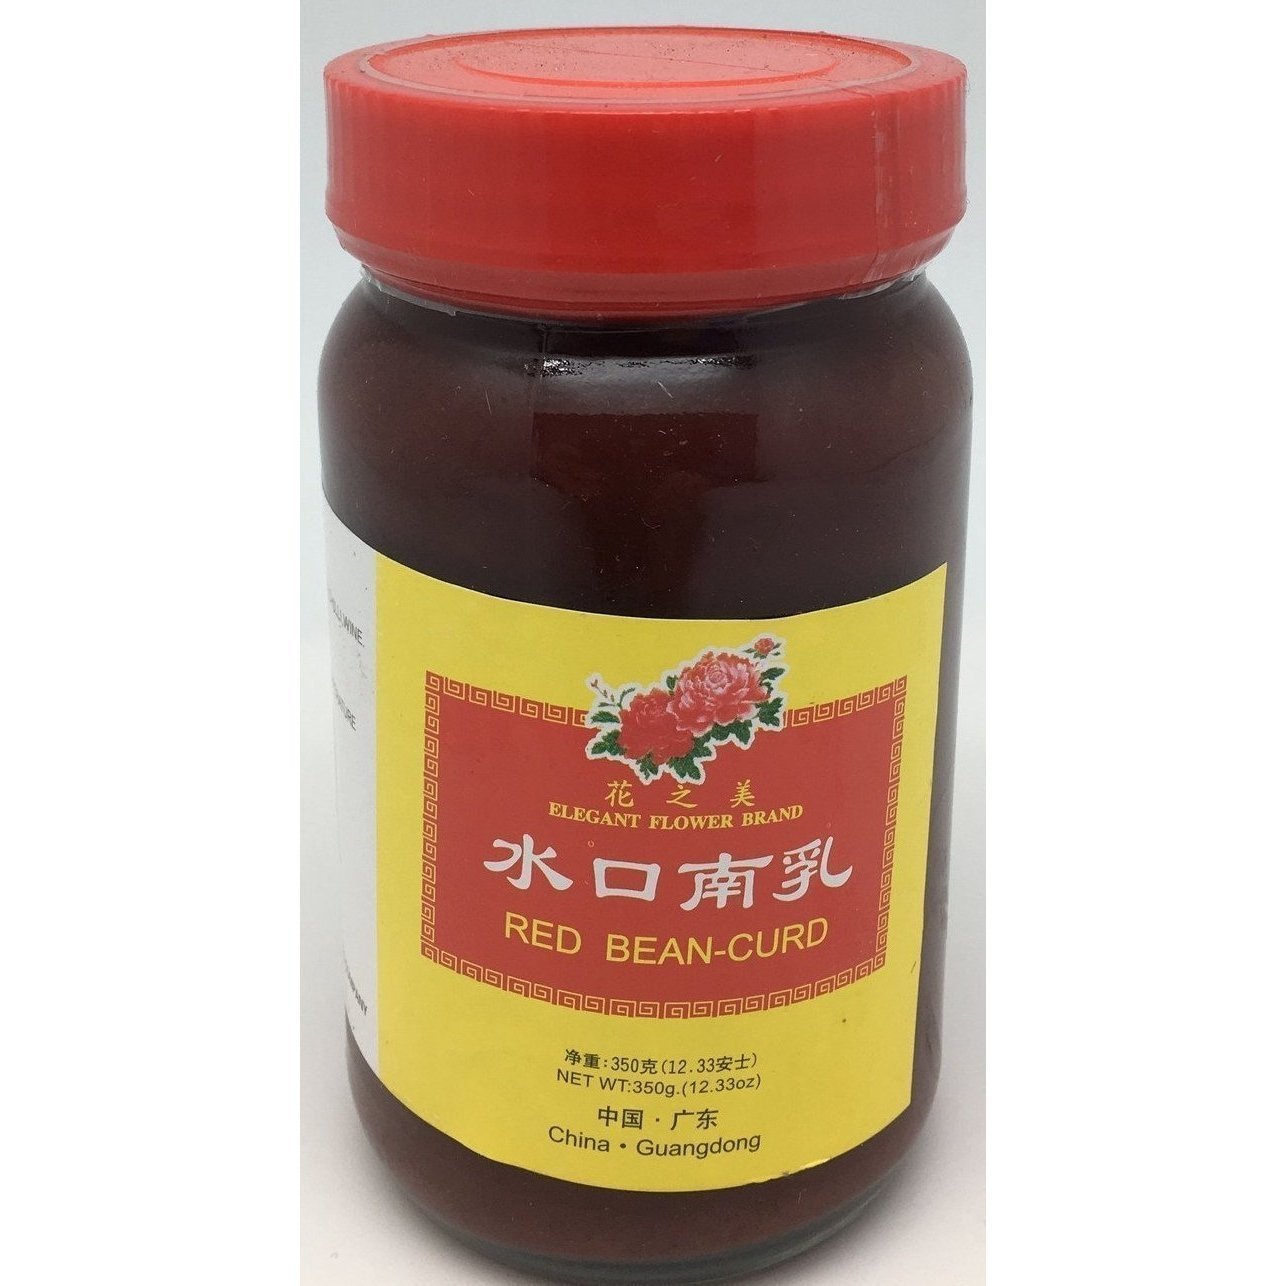 S009R Elegant Flower Brand - Preserved Red-Bean Curd 350g -  36 jar / 1CTN - New Eastland Pty Ltd - Asian food wholesalers